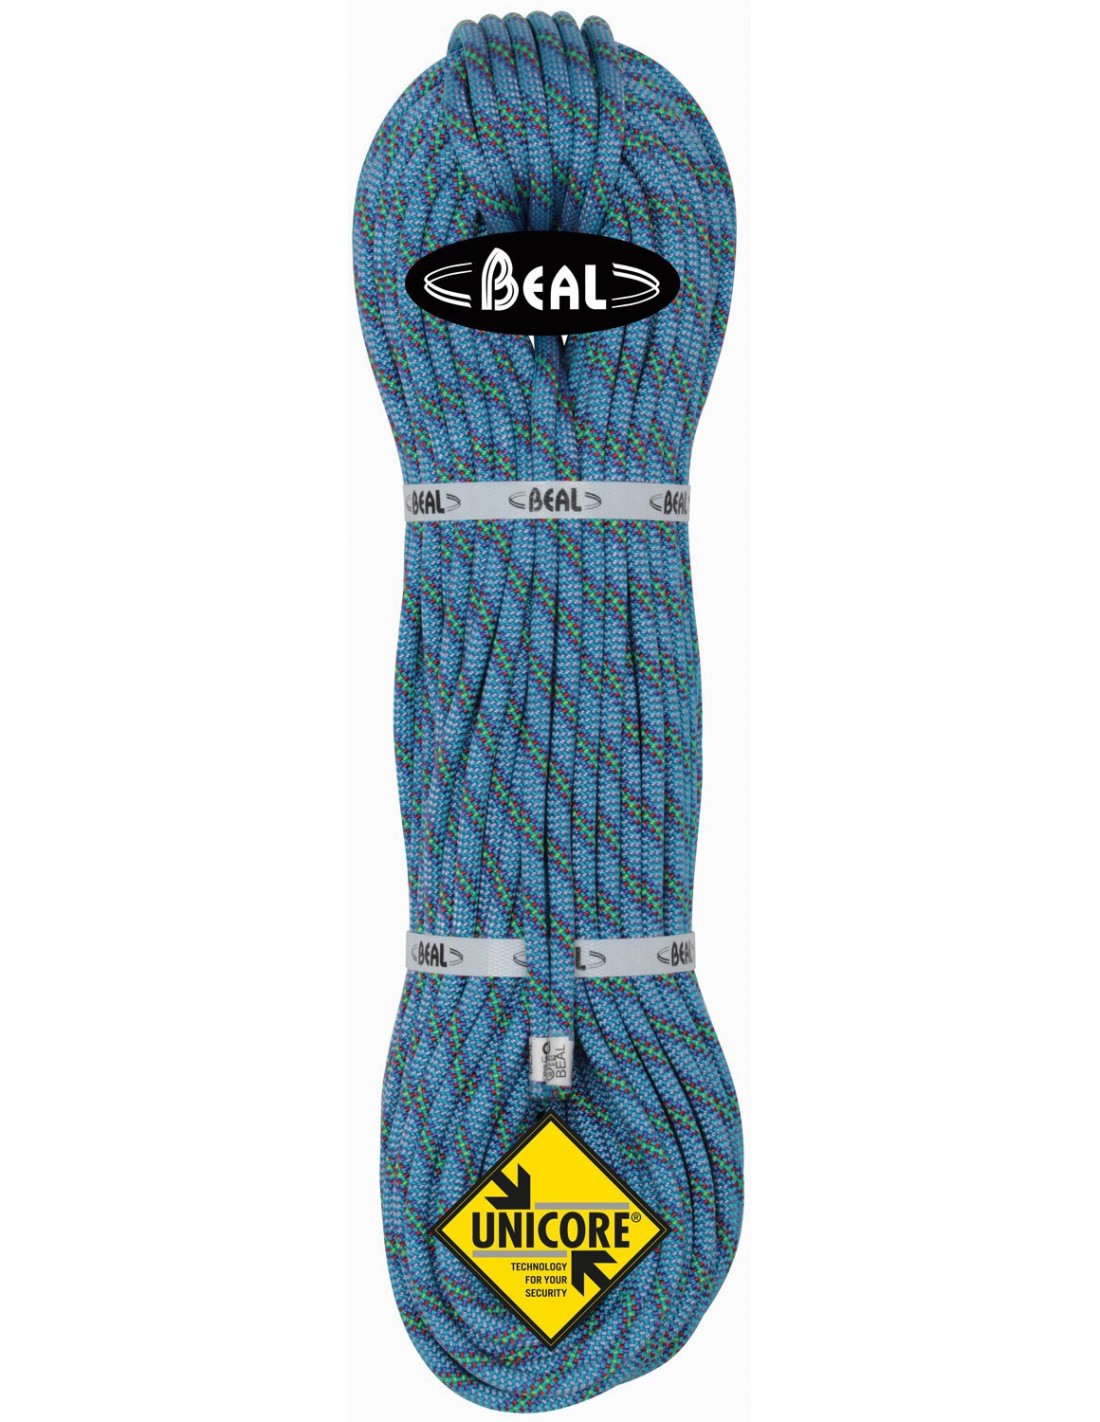 Beal Kletterseil 8,6 Cobra II Unicore - Dry Cover, blue, 60 m Seildurchmesser - 8.6 - 9.0 mm, Seilfarbe - Blau, Seillänge - 60 m, Seilvariante - Halbseil, von Beal